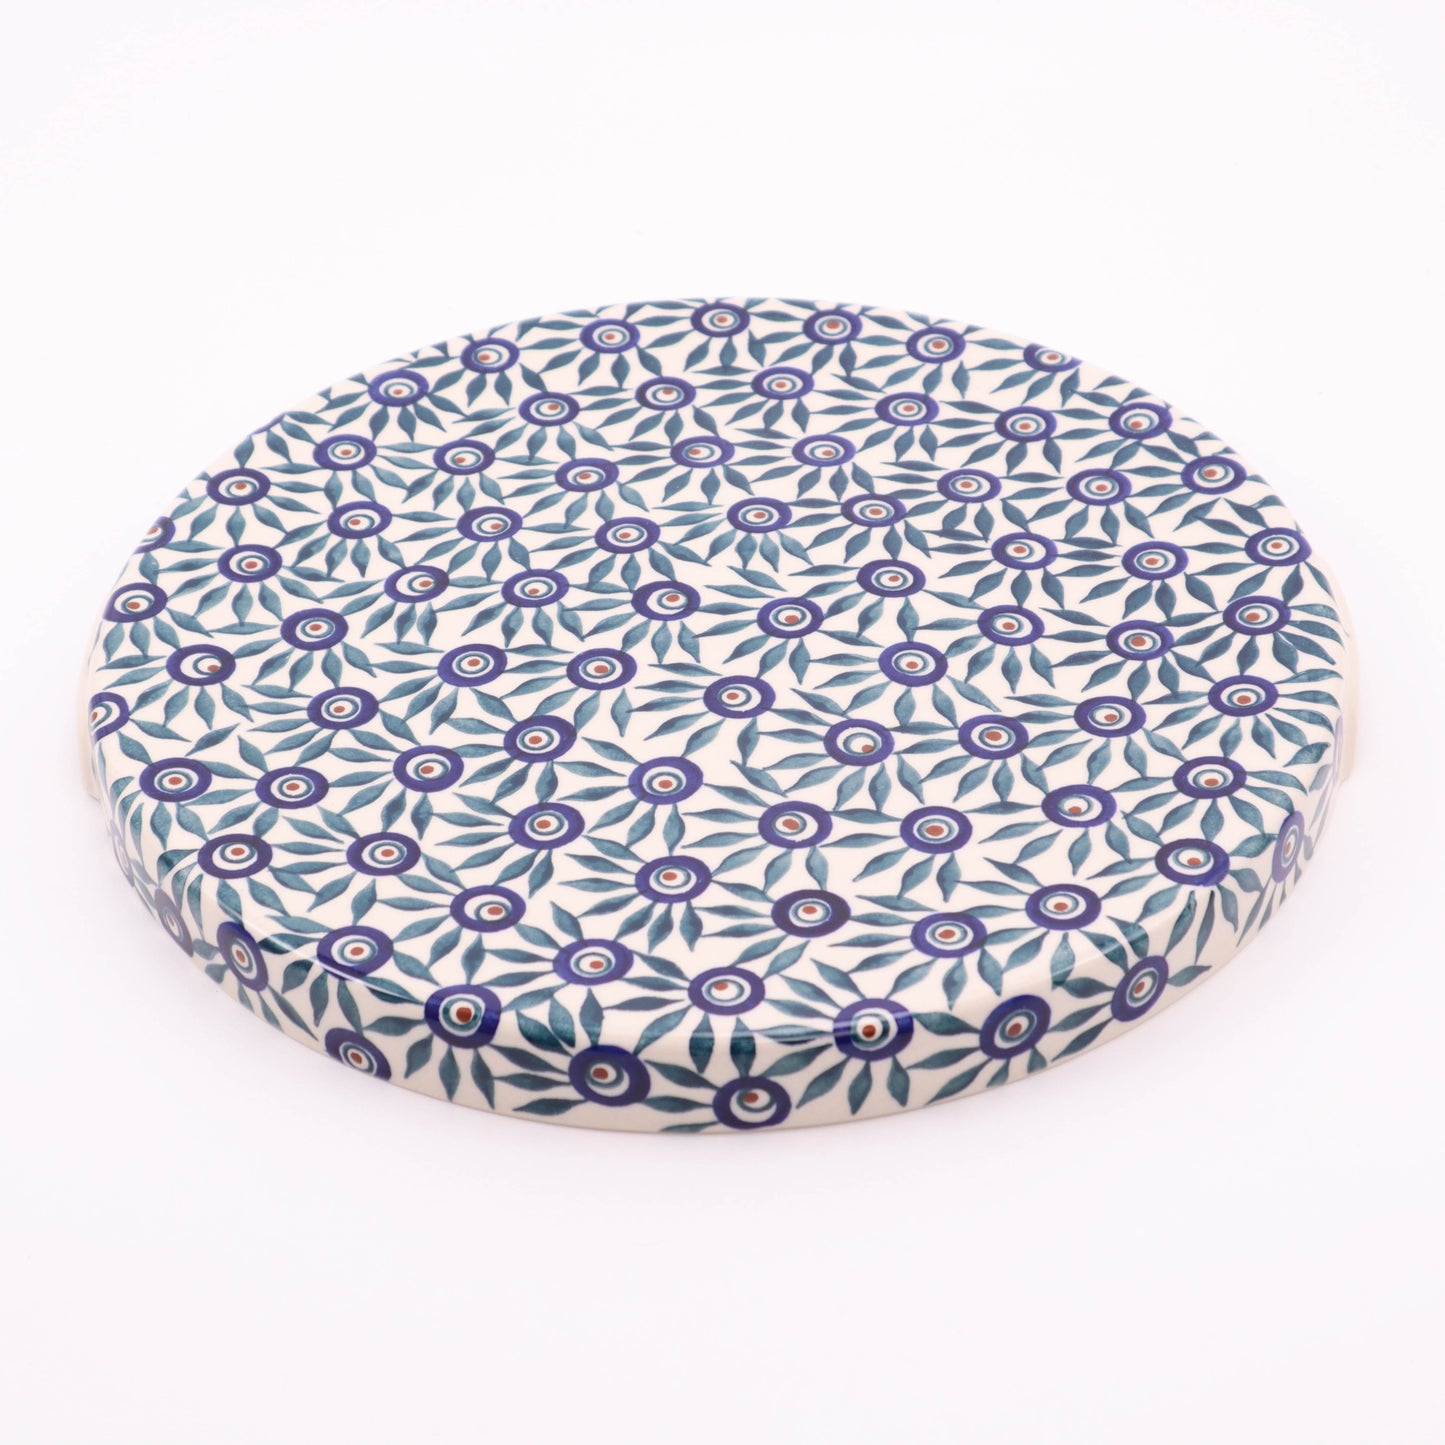 12.5" Cake Plate. Pattern: Modern Peacock